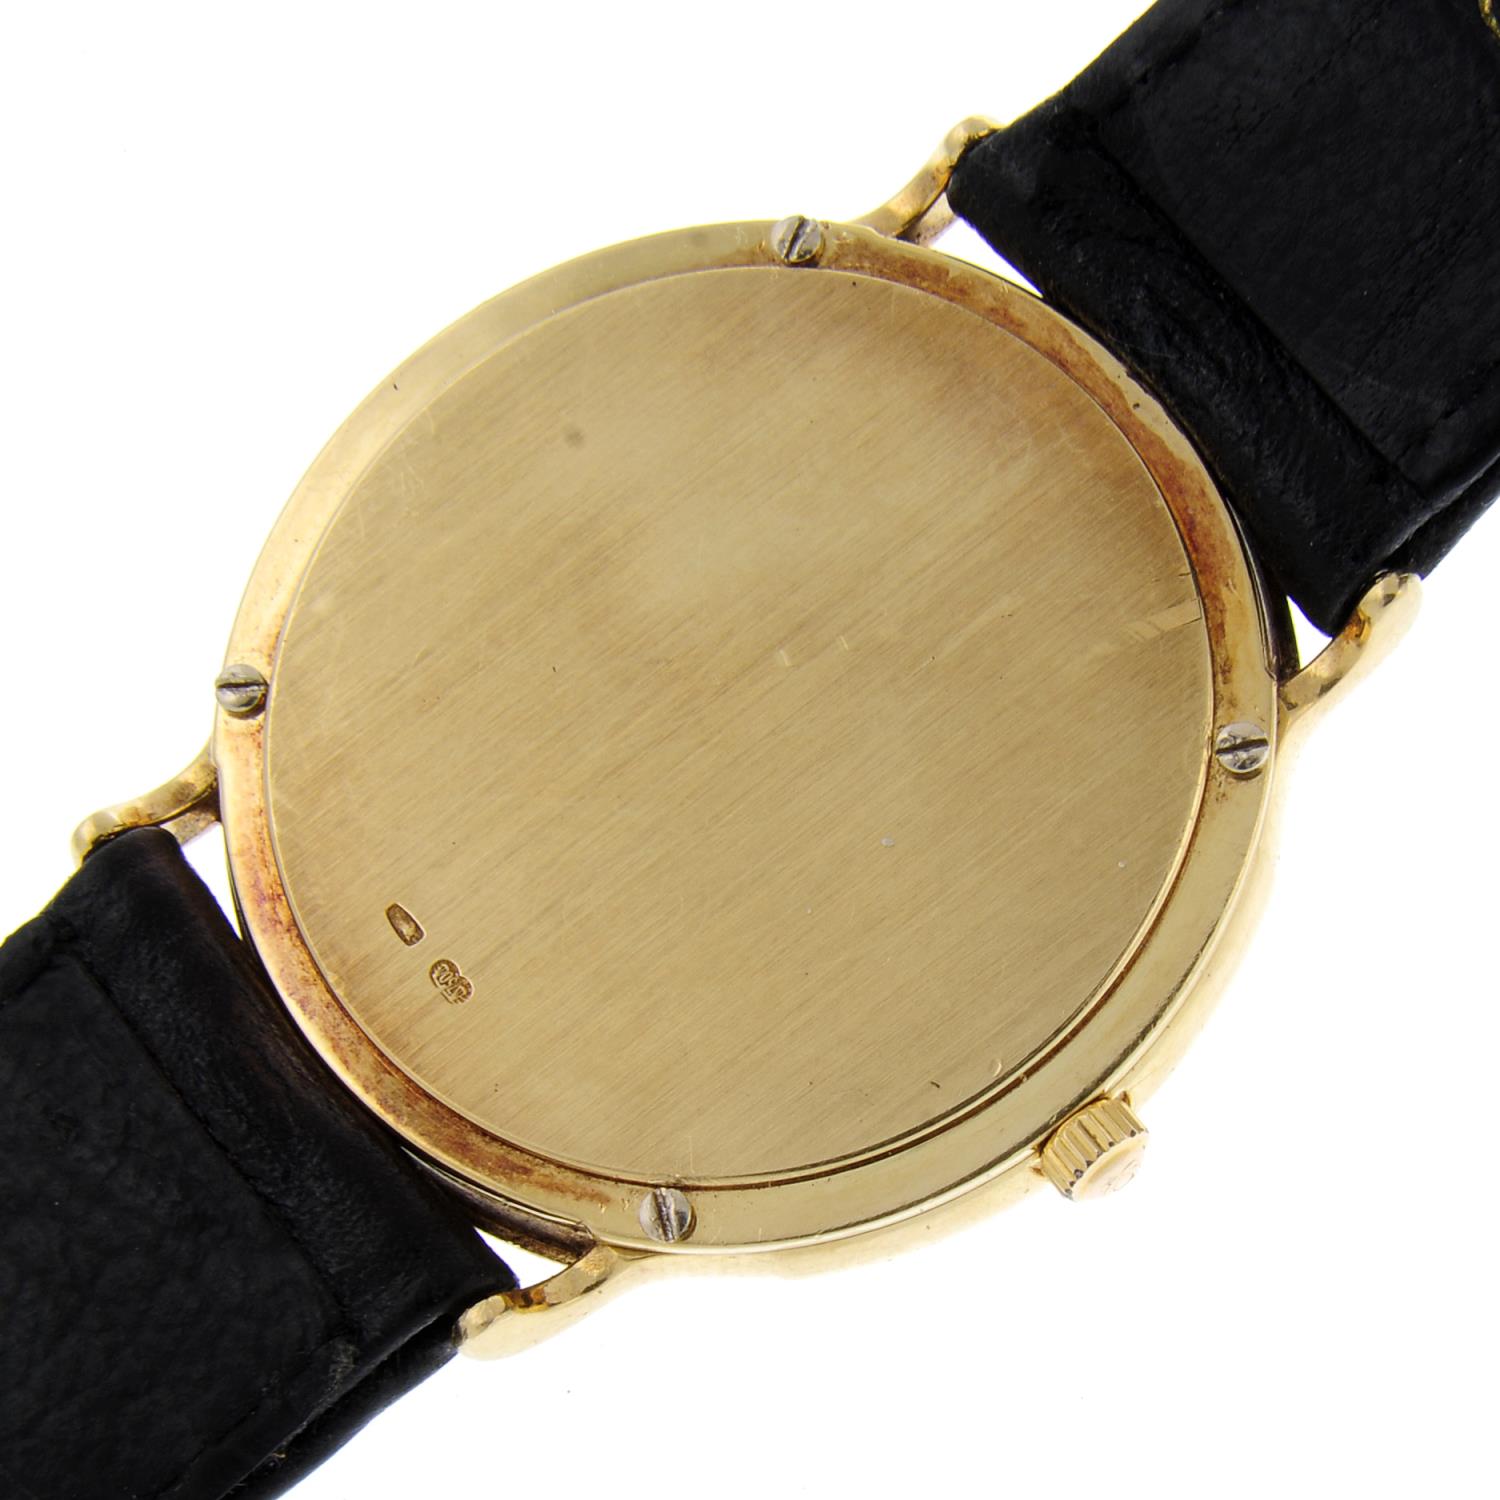 OMEGA - a wrist watch. - Image 4 of 5